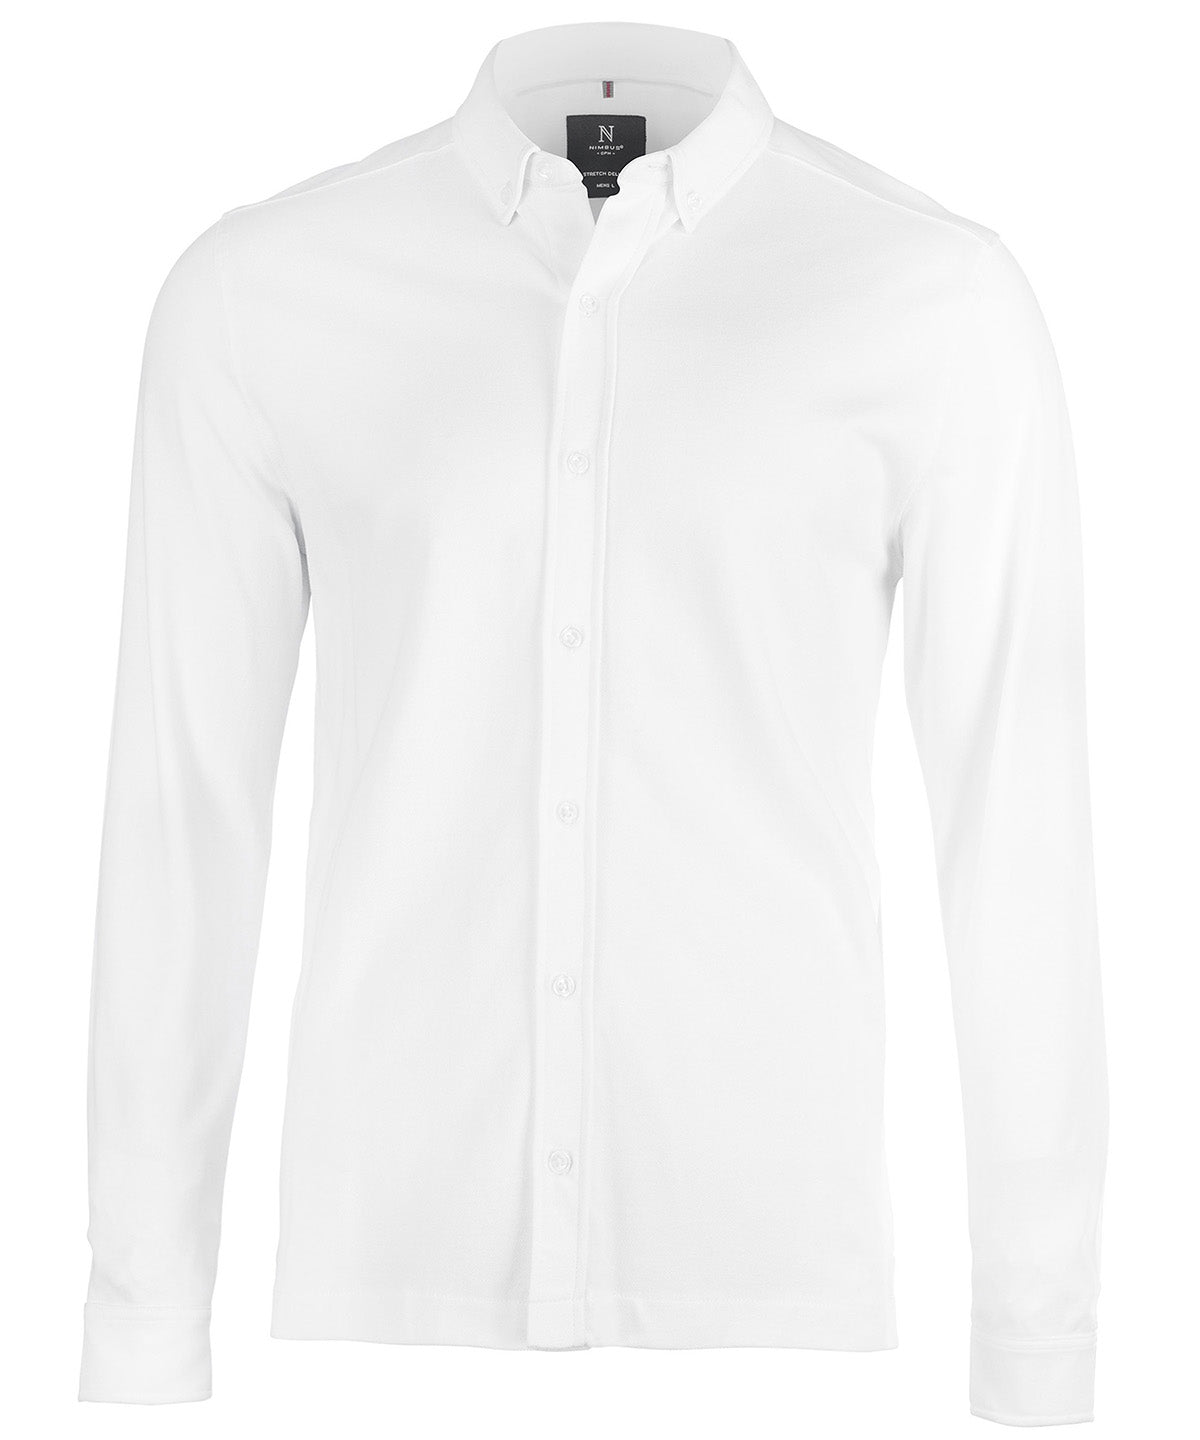 Organic Long Sleeve Casual Button Down Shirt (Mens/Unisex)